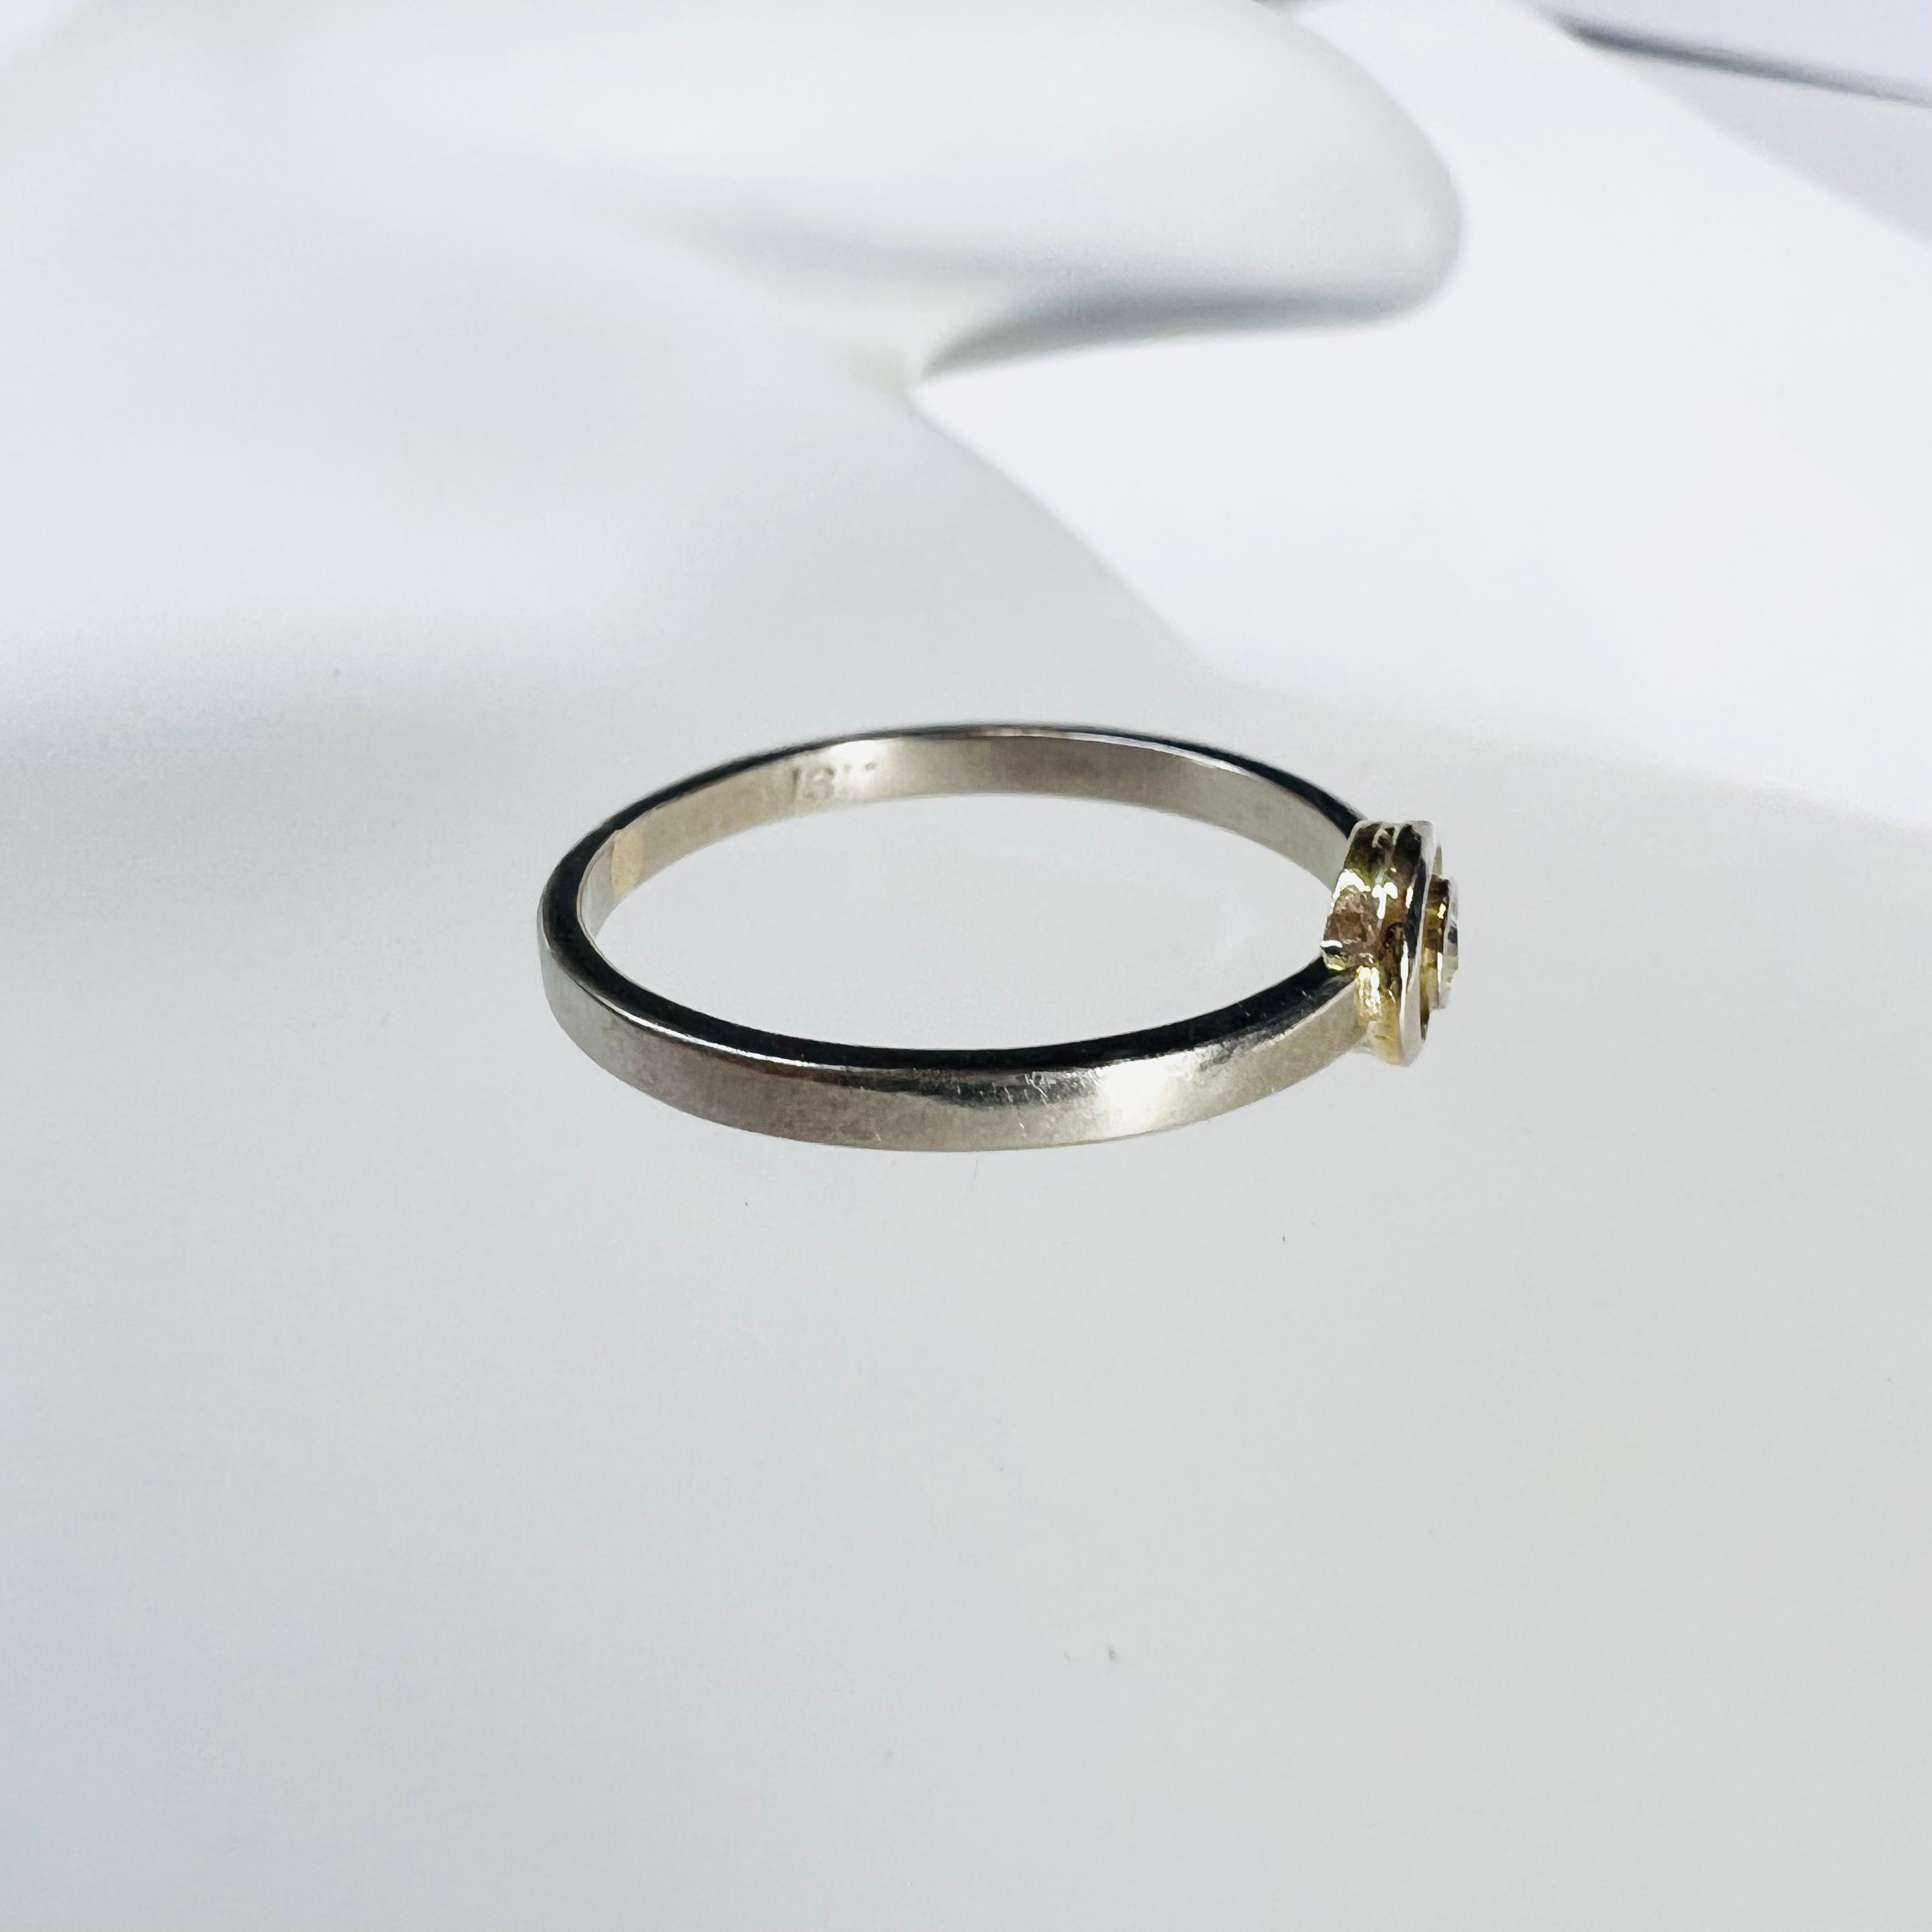 Solid 18K White Gold Bezel Diamond Engagement Ring Band Size 7.5